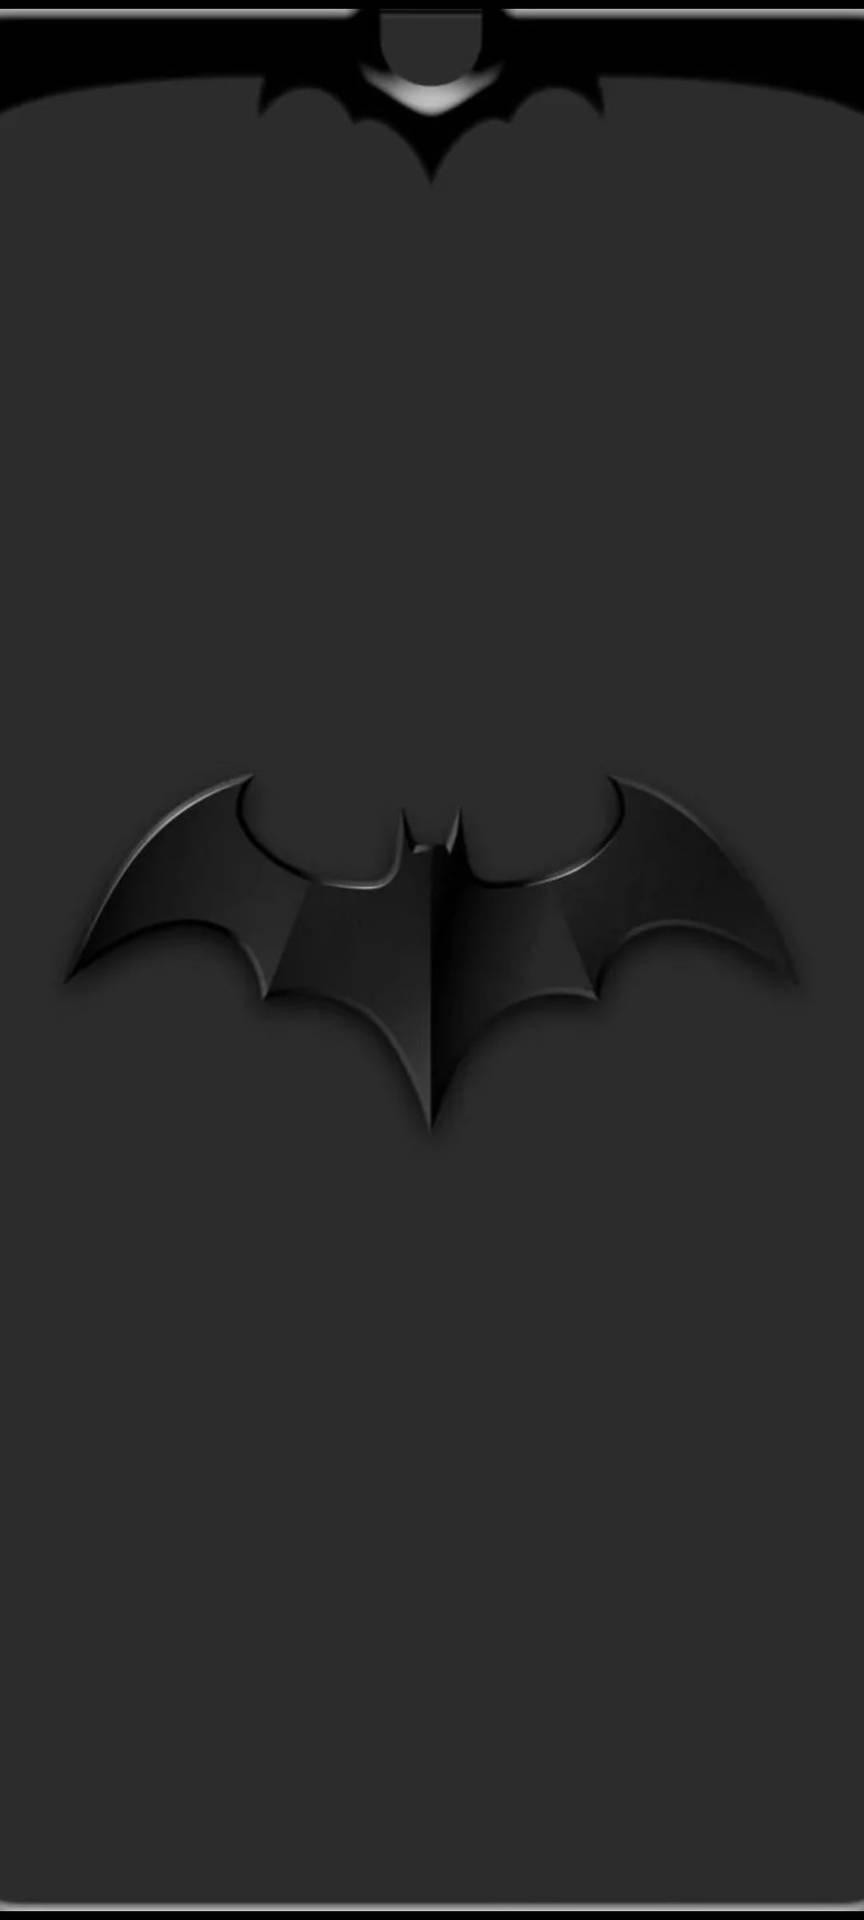 Fondode Pantalla Para Iphone Con El Logo De Batman En Negro En Relieve. Fondo de pantalla